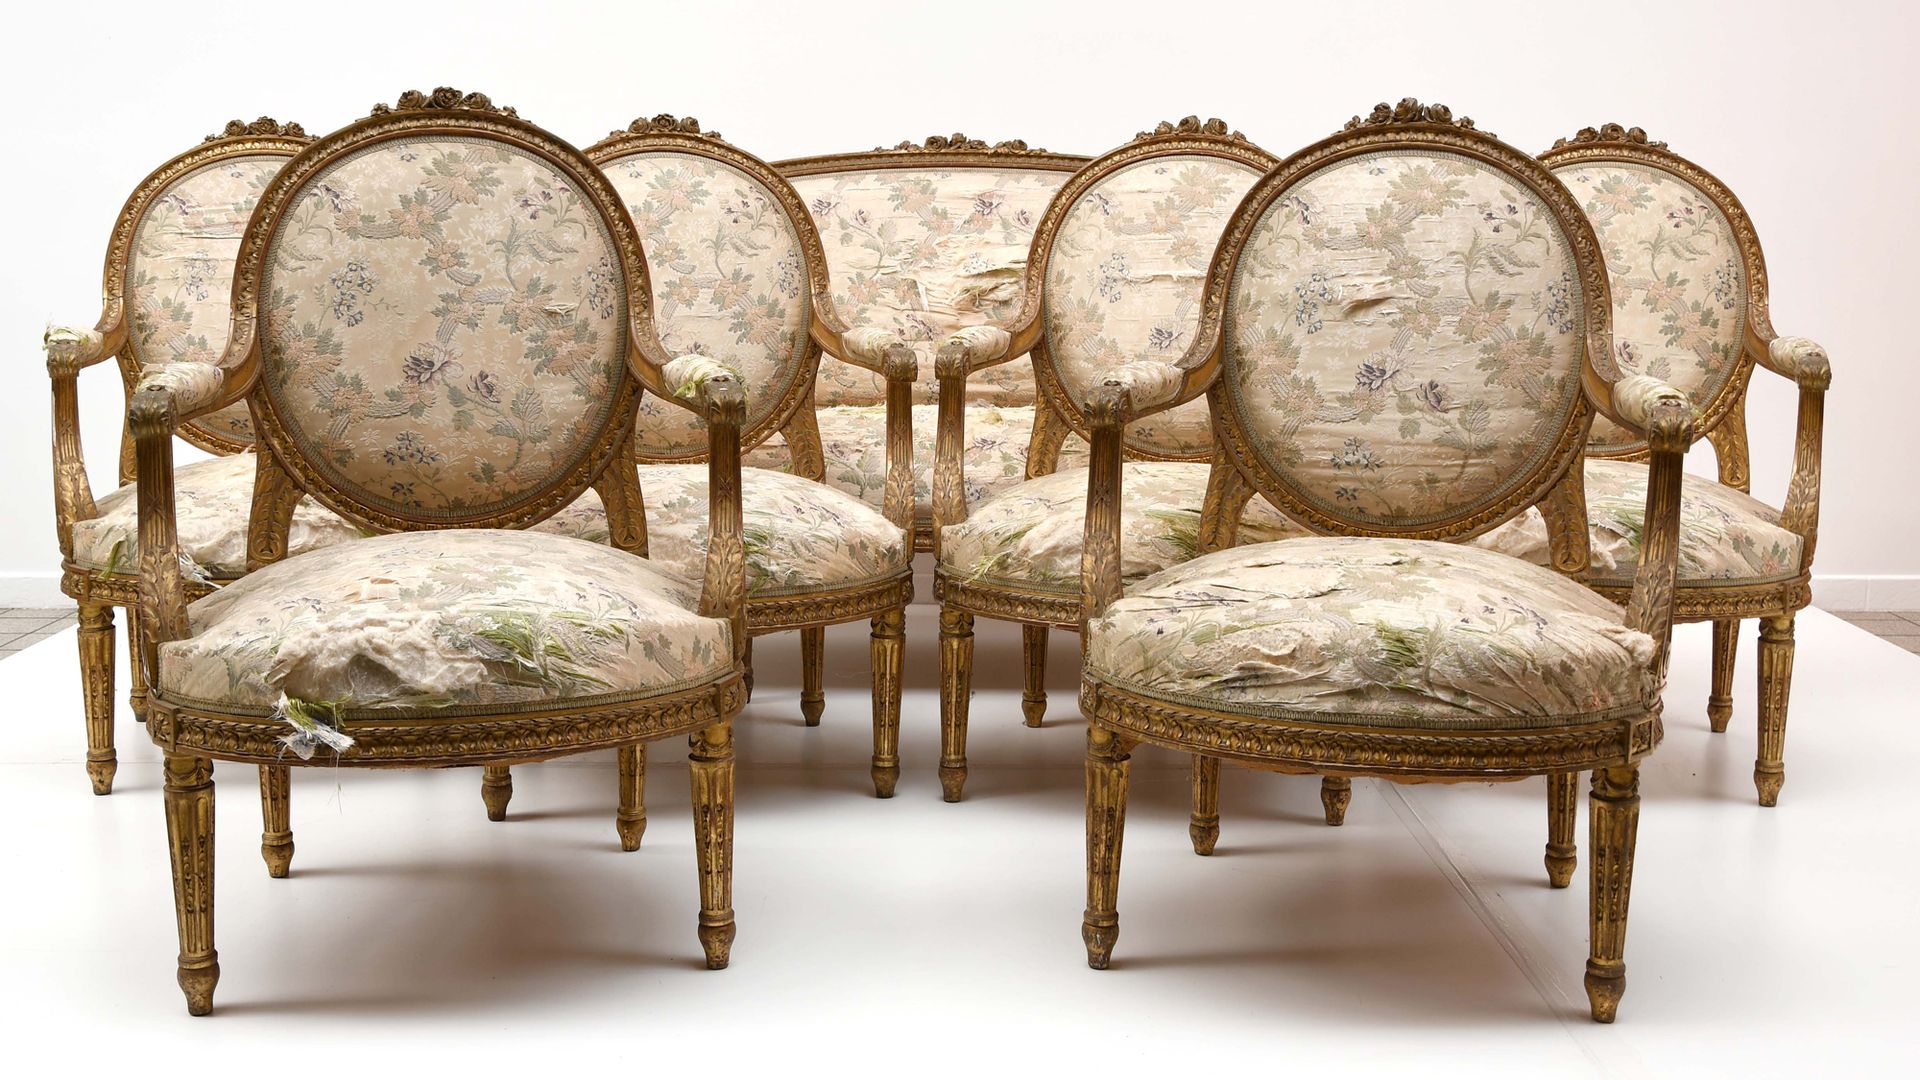 Null 拿破仑三世的沙龙，采用路易十六风格的木雕和镀金灰泥，用破损的丝绸做装饰。

一个篮子沙发和六个卡布利特。